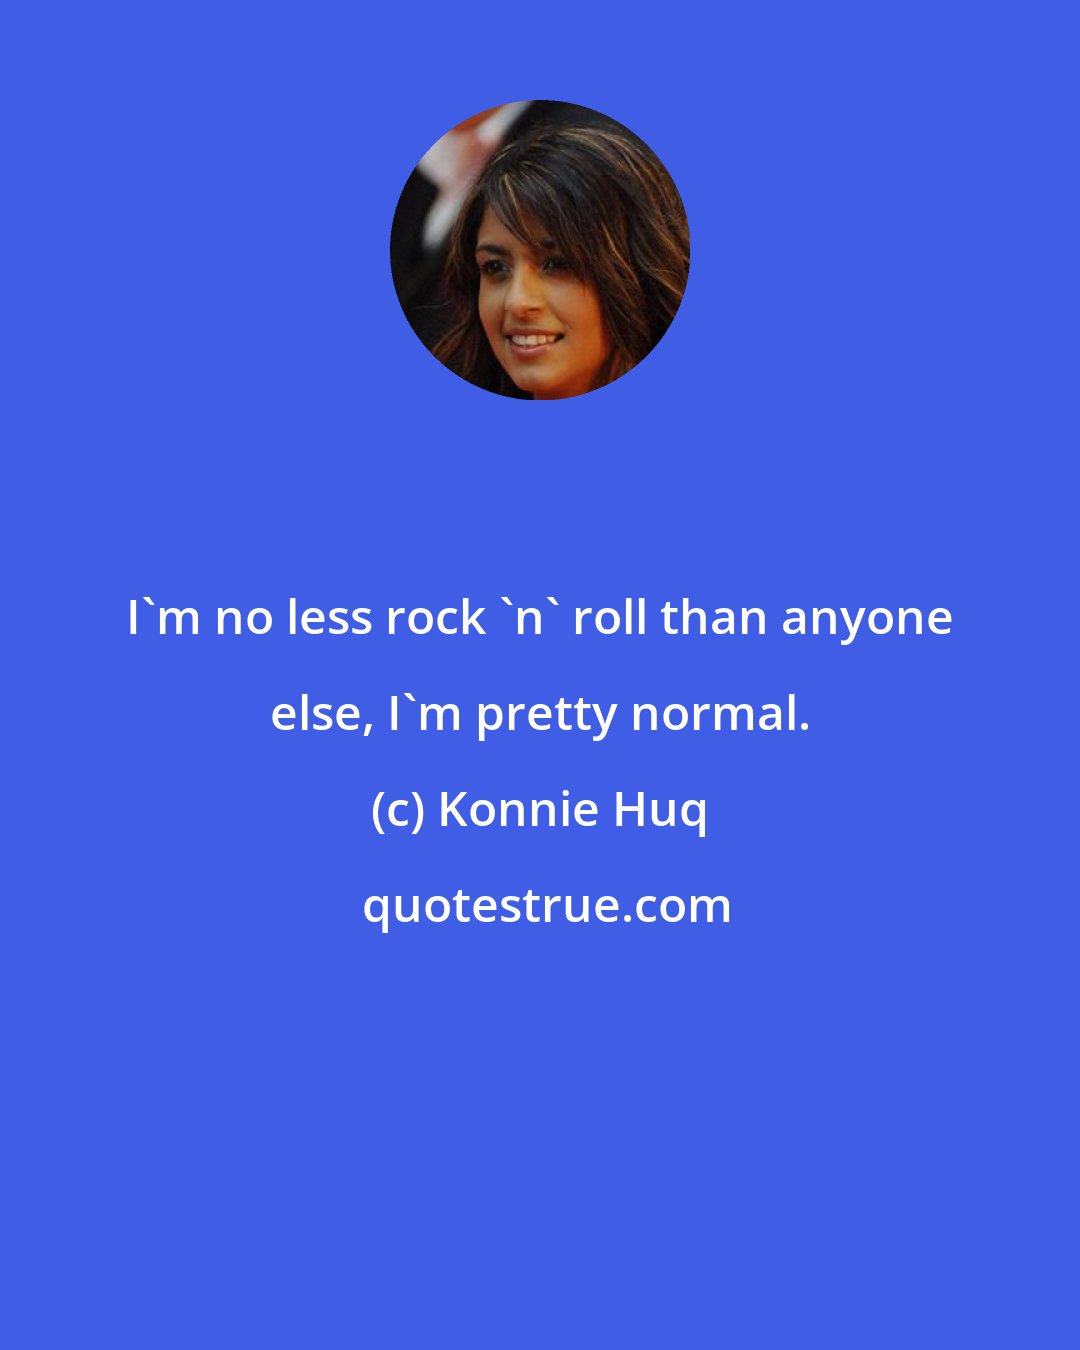 Konnie Huq: I'm no less rock 'n' roll than anyone else, I'm pretty normal.